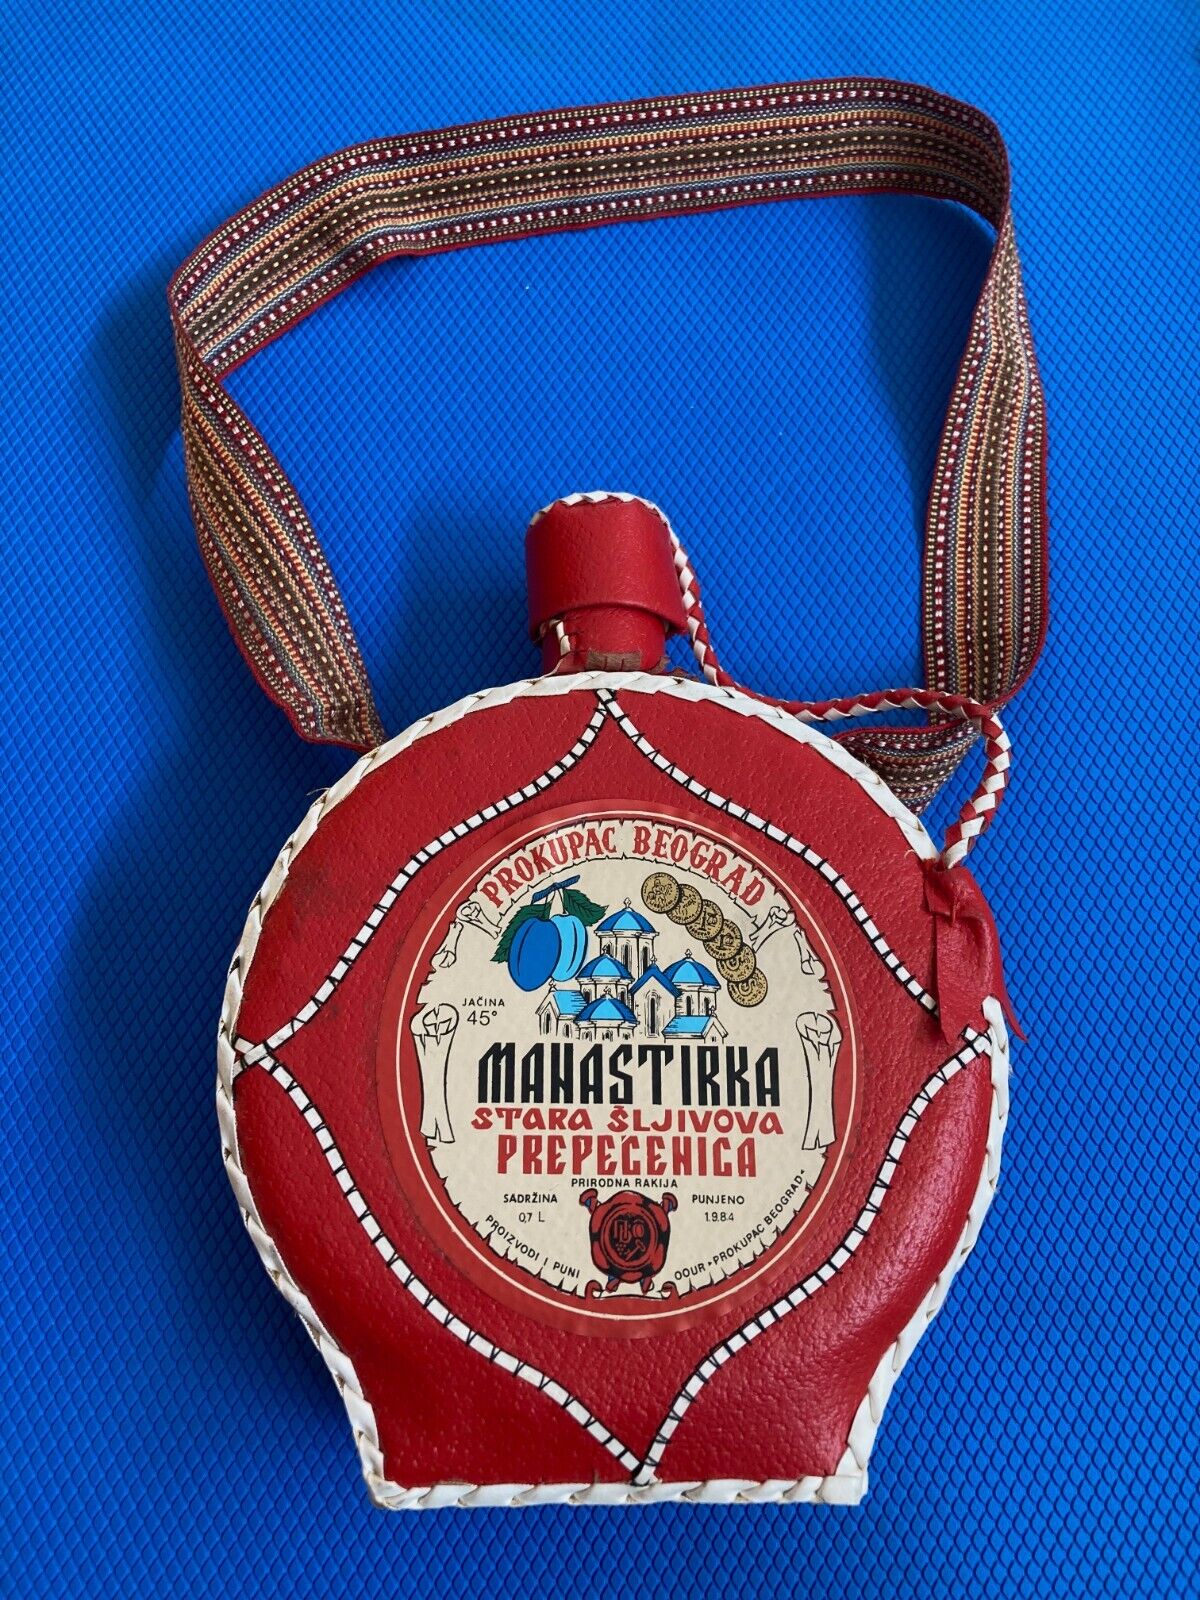 Manastirka (Monastery) brand souvenir flask for Serbian plum brandy.  